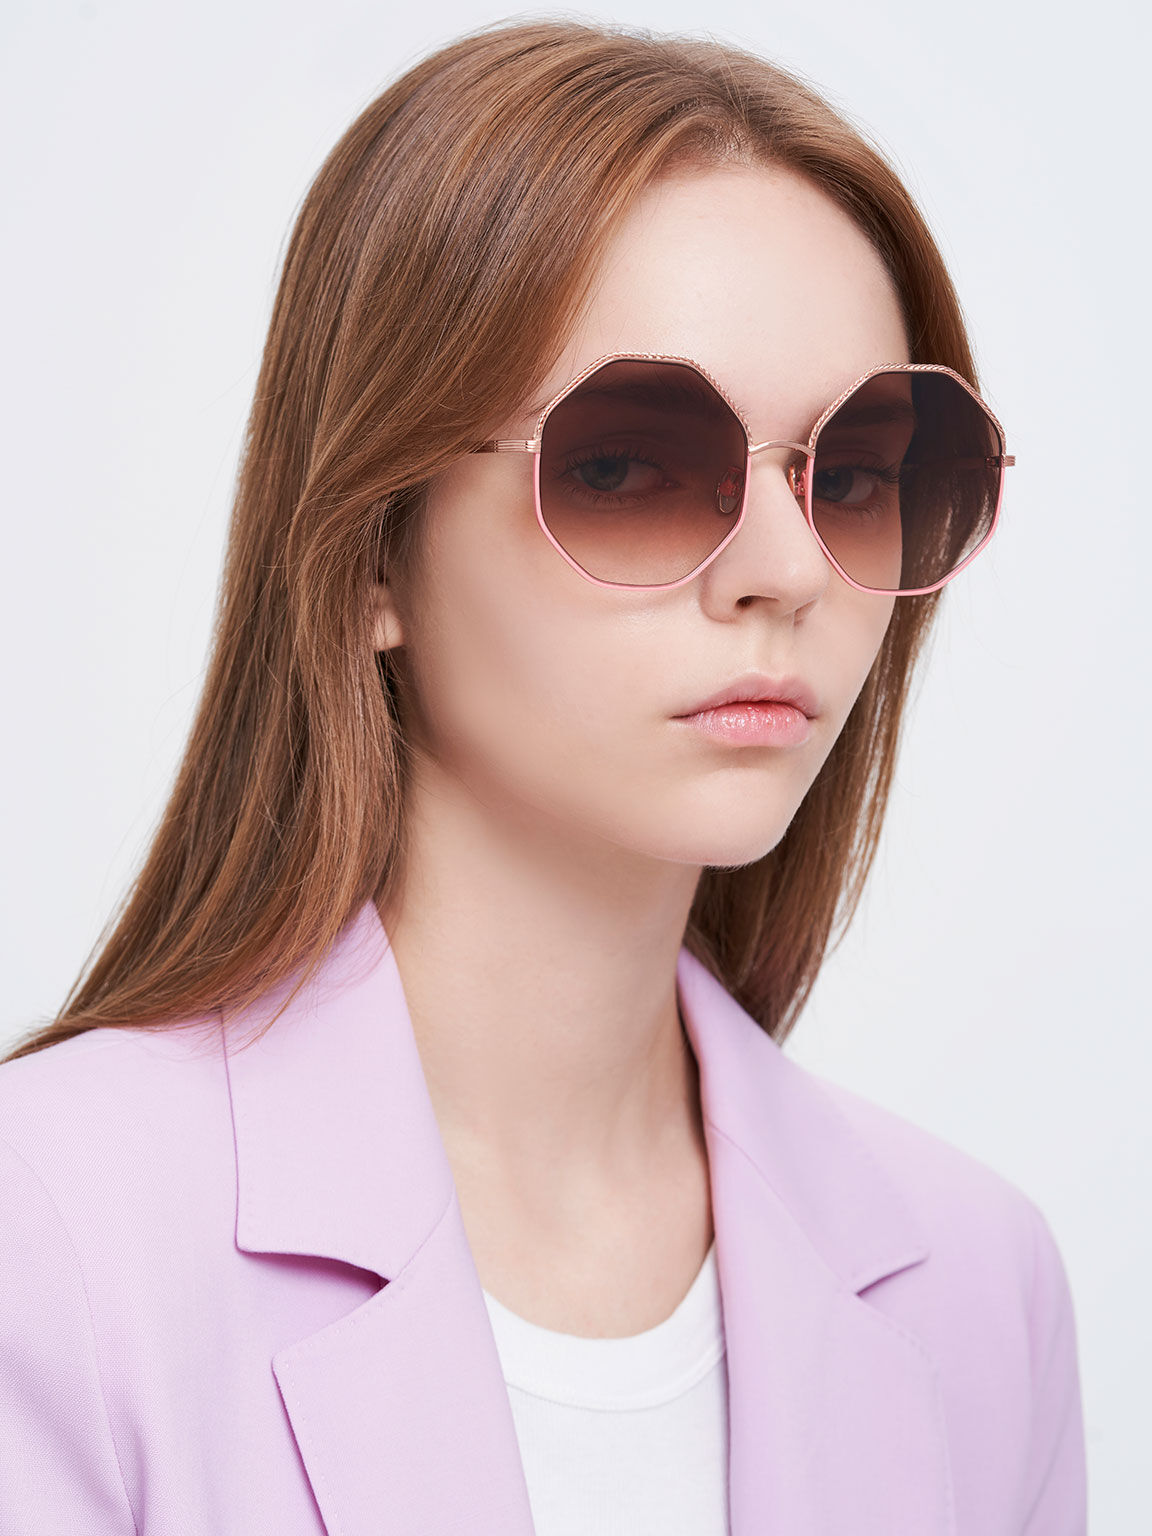 Buy Baby Daisy Pink Sunglasses by Snapper Rock online - Snapper Rock